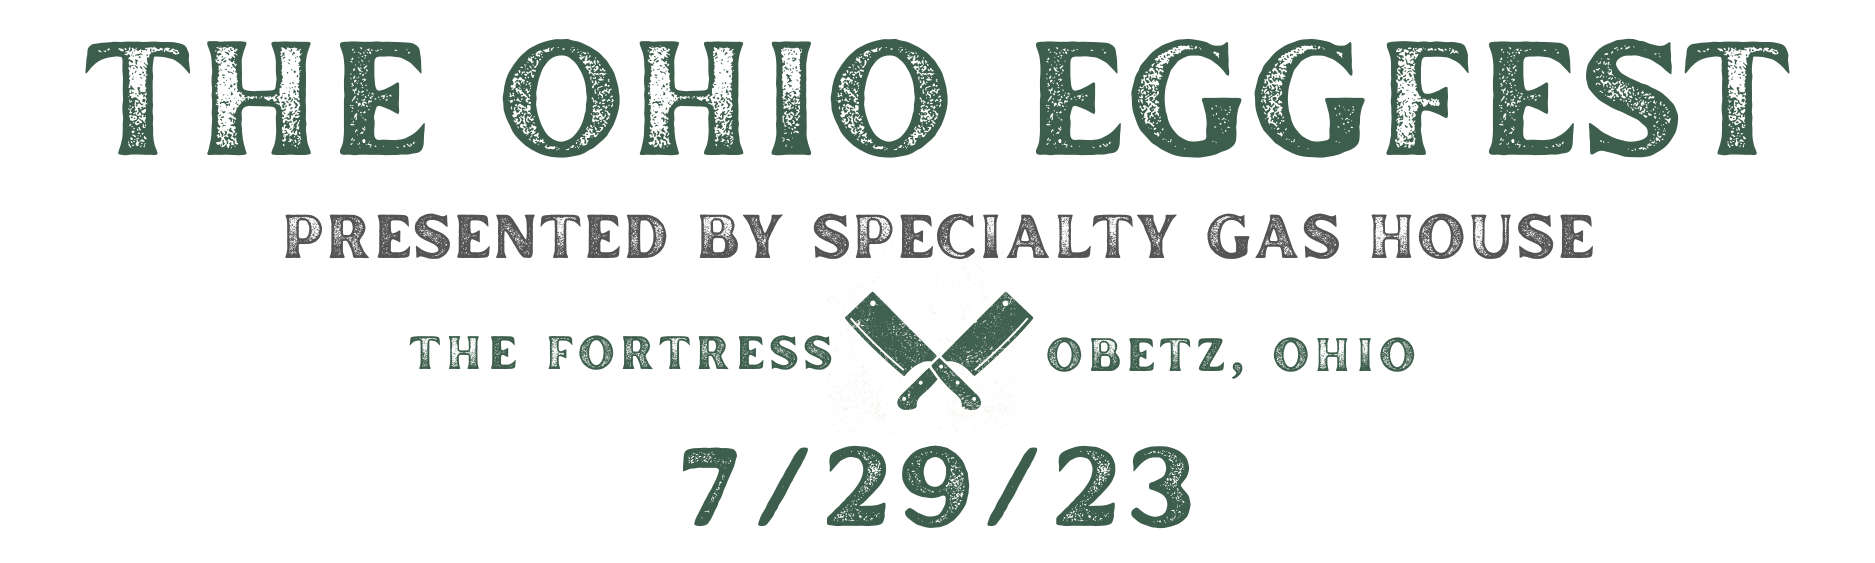 the ohio eggfest columbus ohio date and location big green egg festival